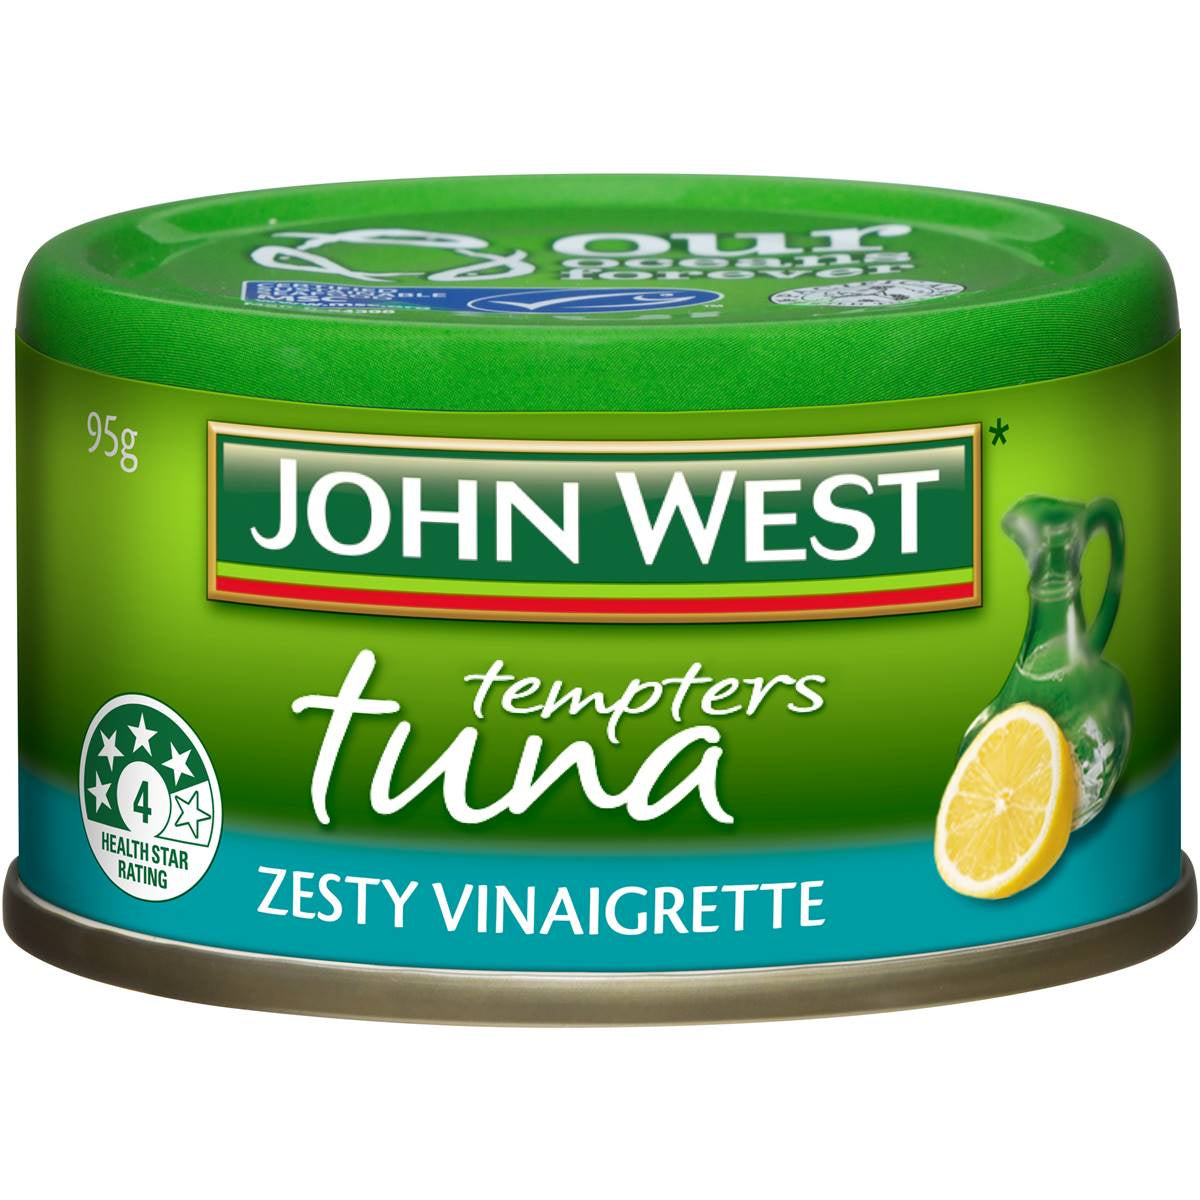 John West Tempters Tuna Zesty Vinaigrette 95g